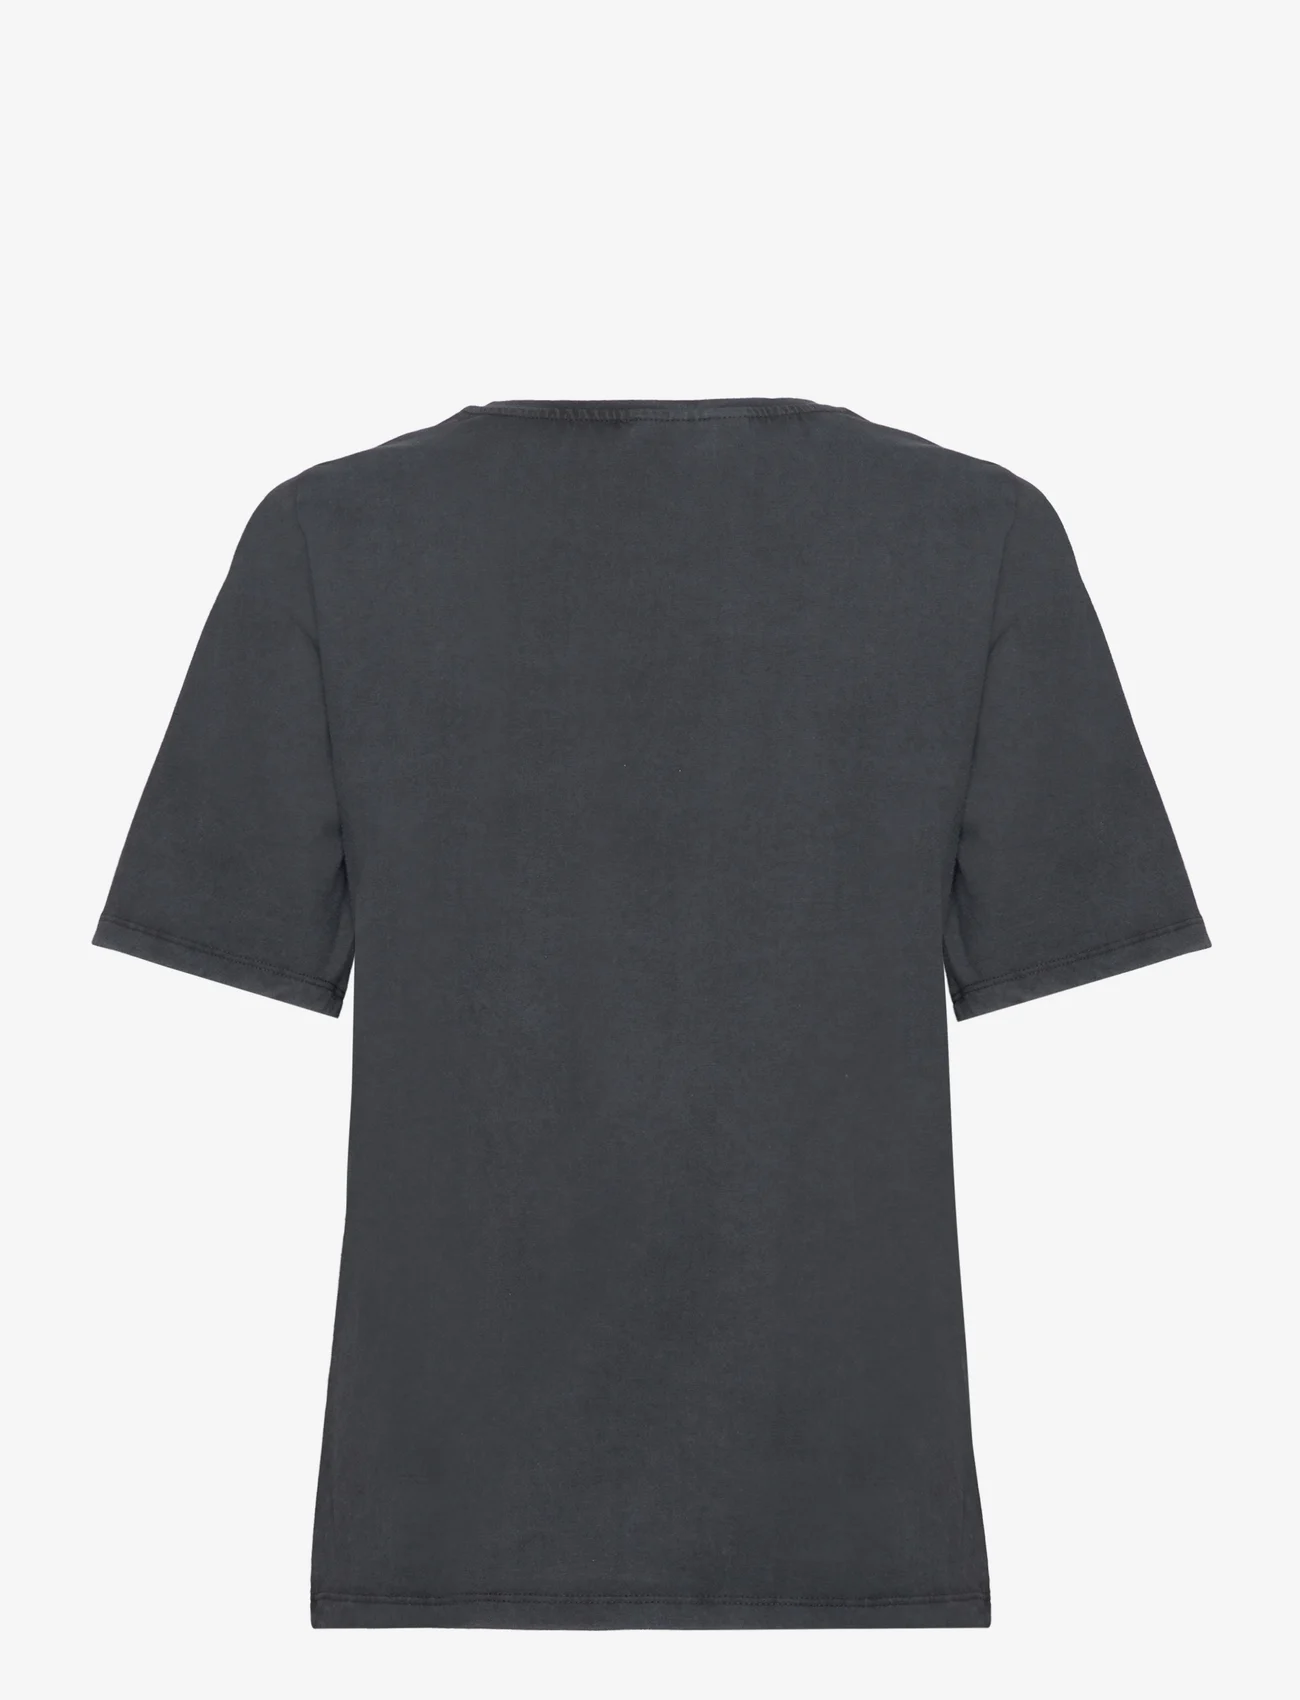 Pulz Jeans - PZELONA Oneck Tshirt - laagste prijzen - black beauty - 1